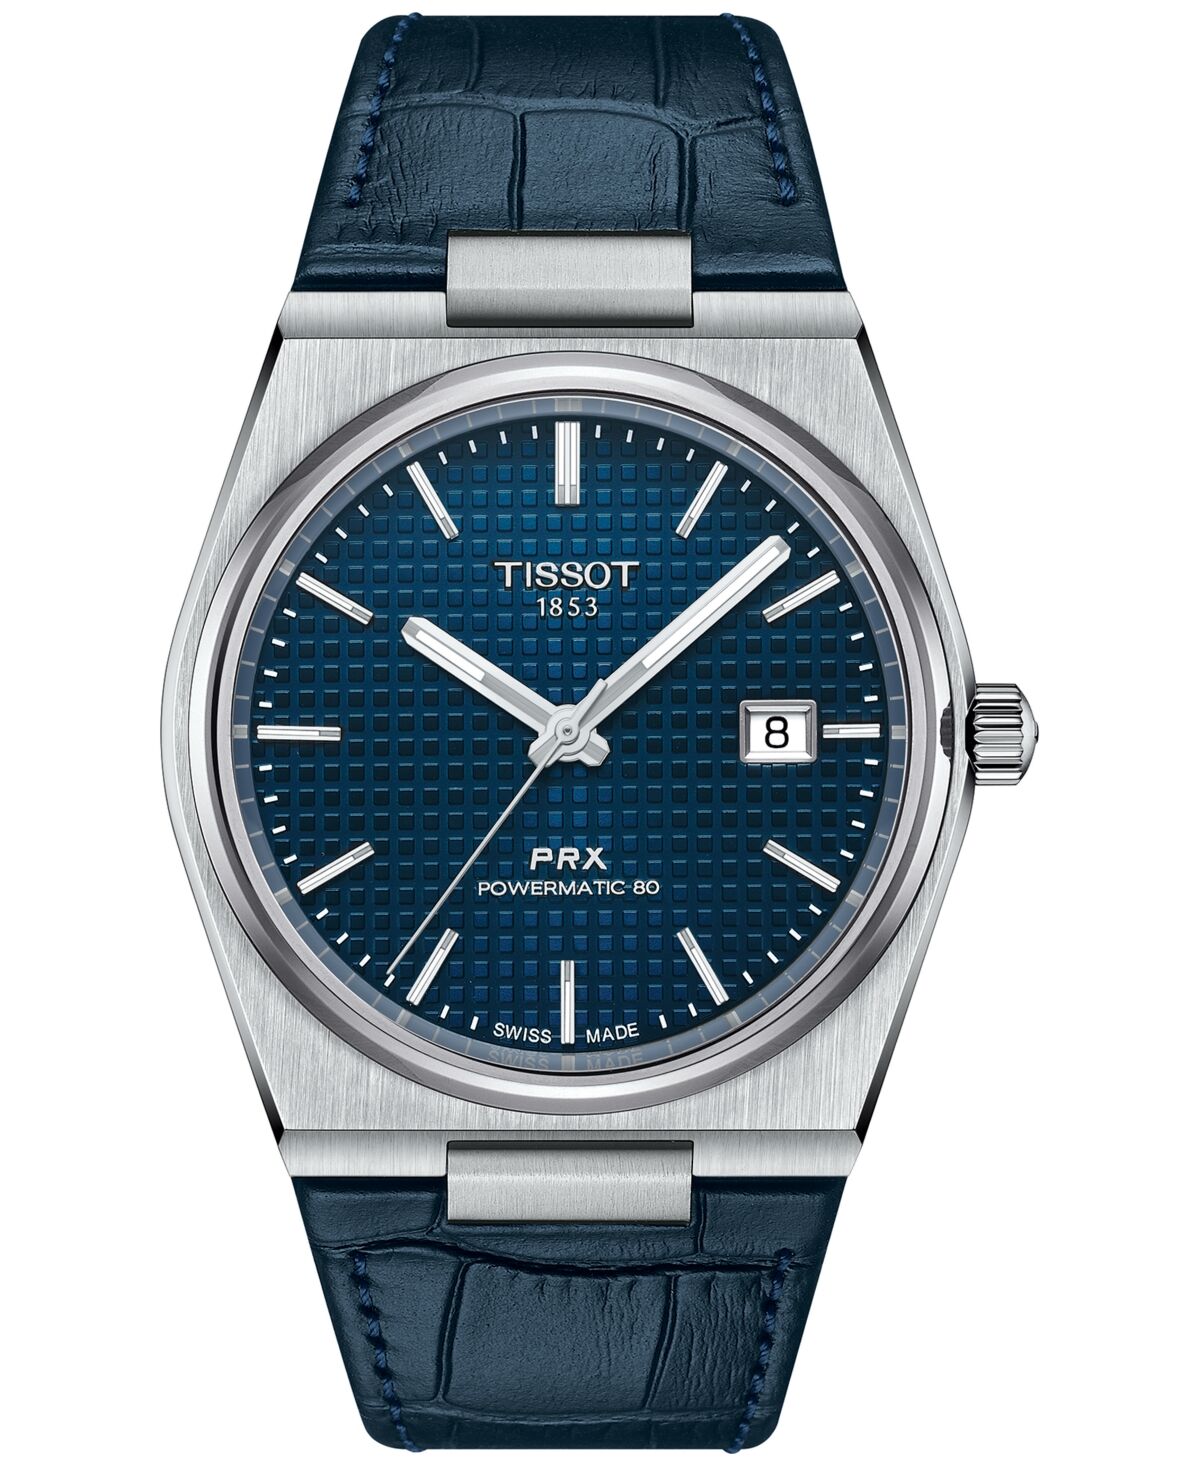 Tissot Men's Swiss Automatic Prx Powermatic 80 Blue Leather Strap Watch 40mm - Blue